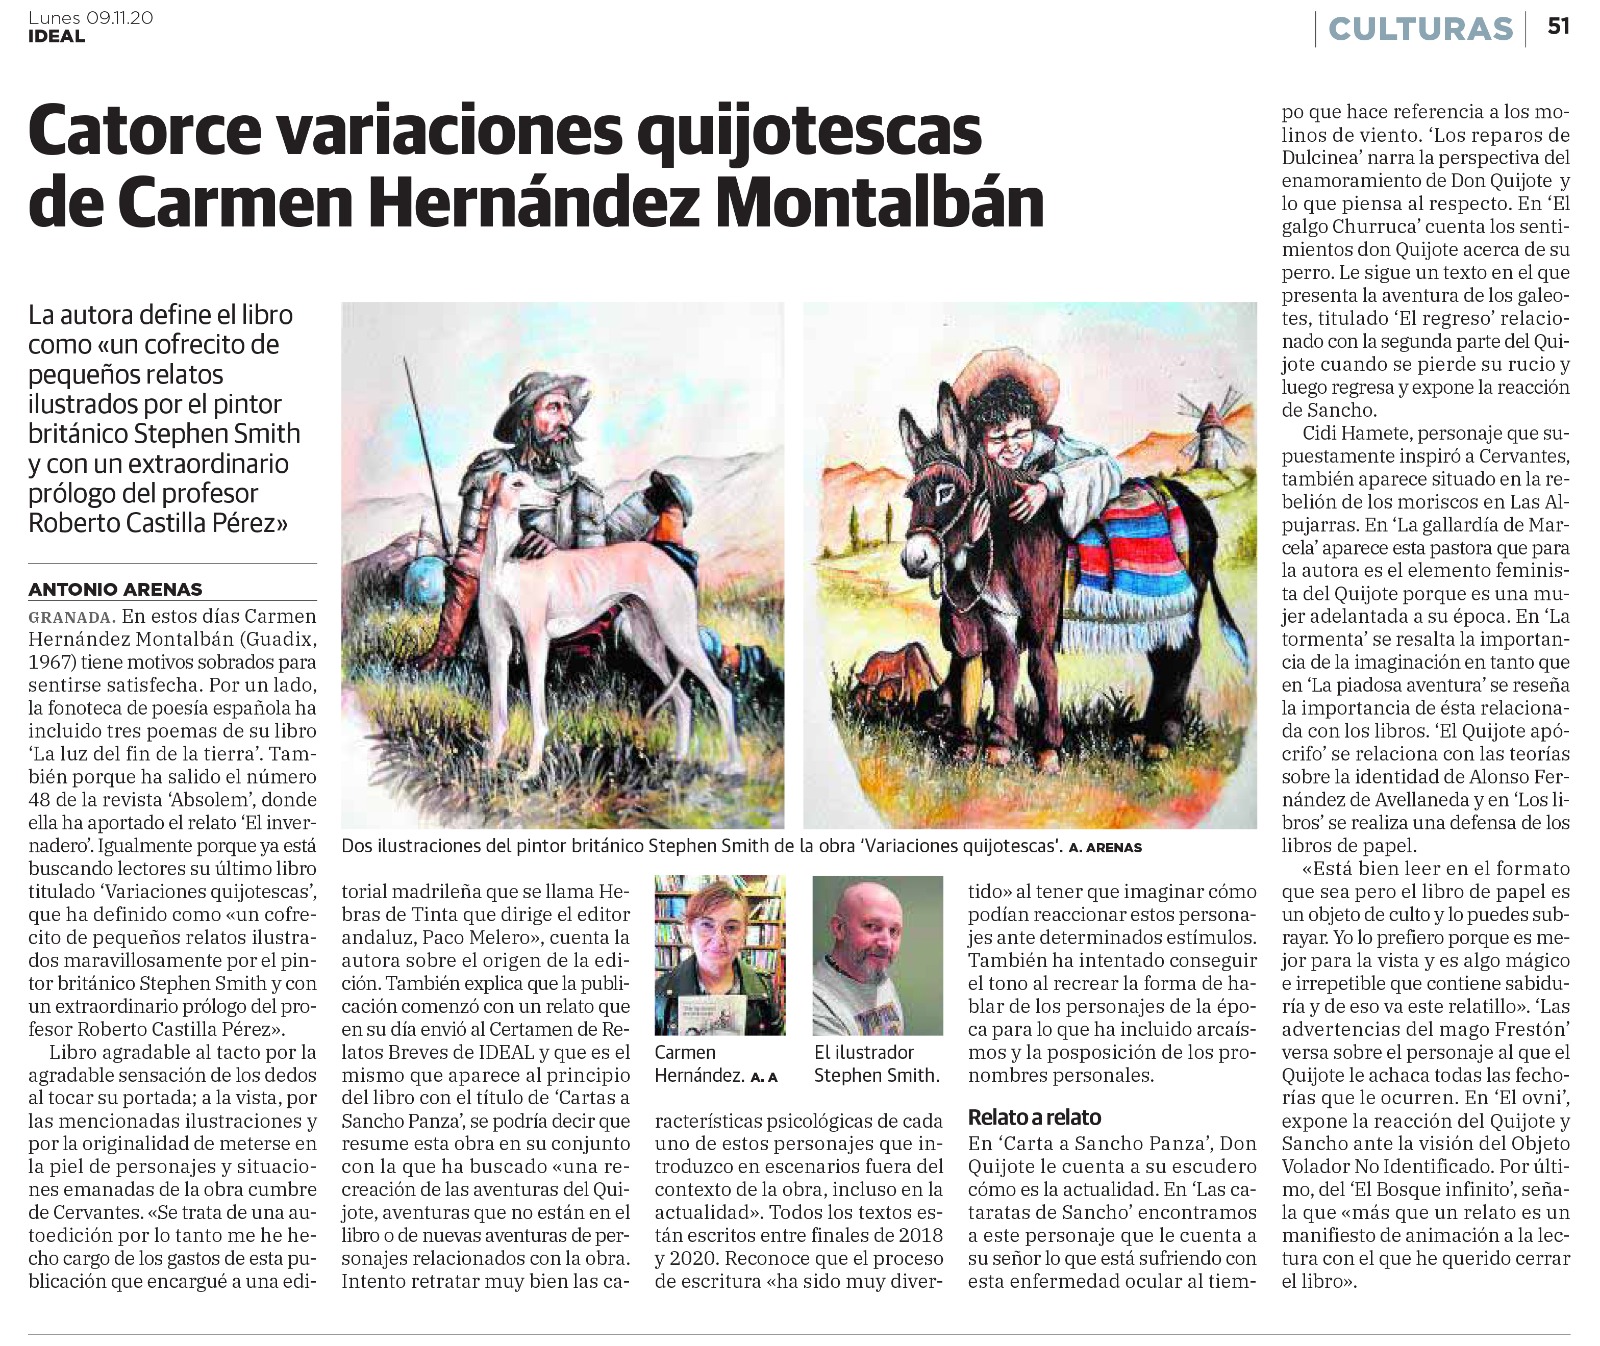 Don Quixote 15 newspaper